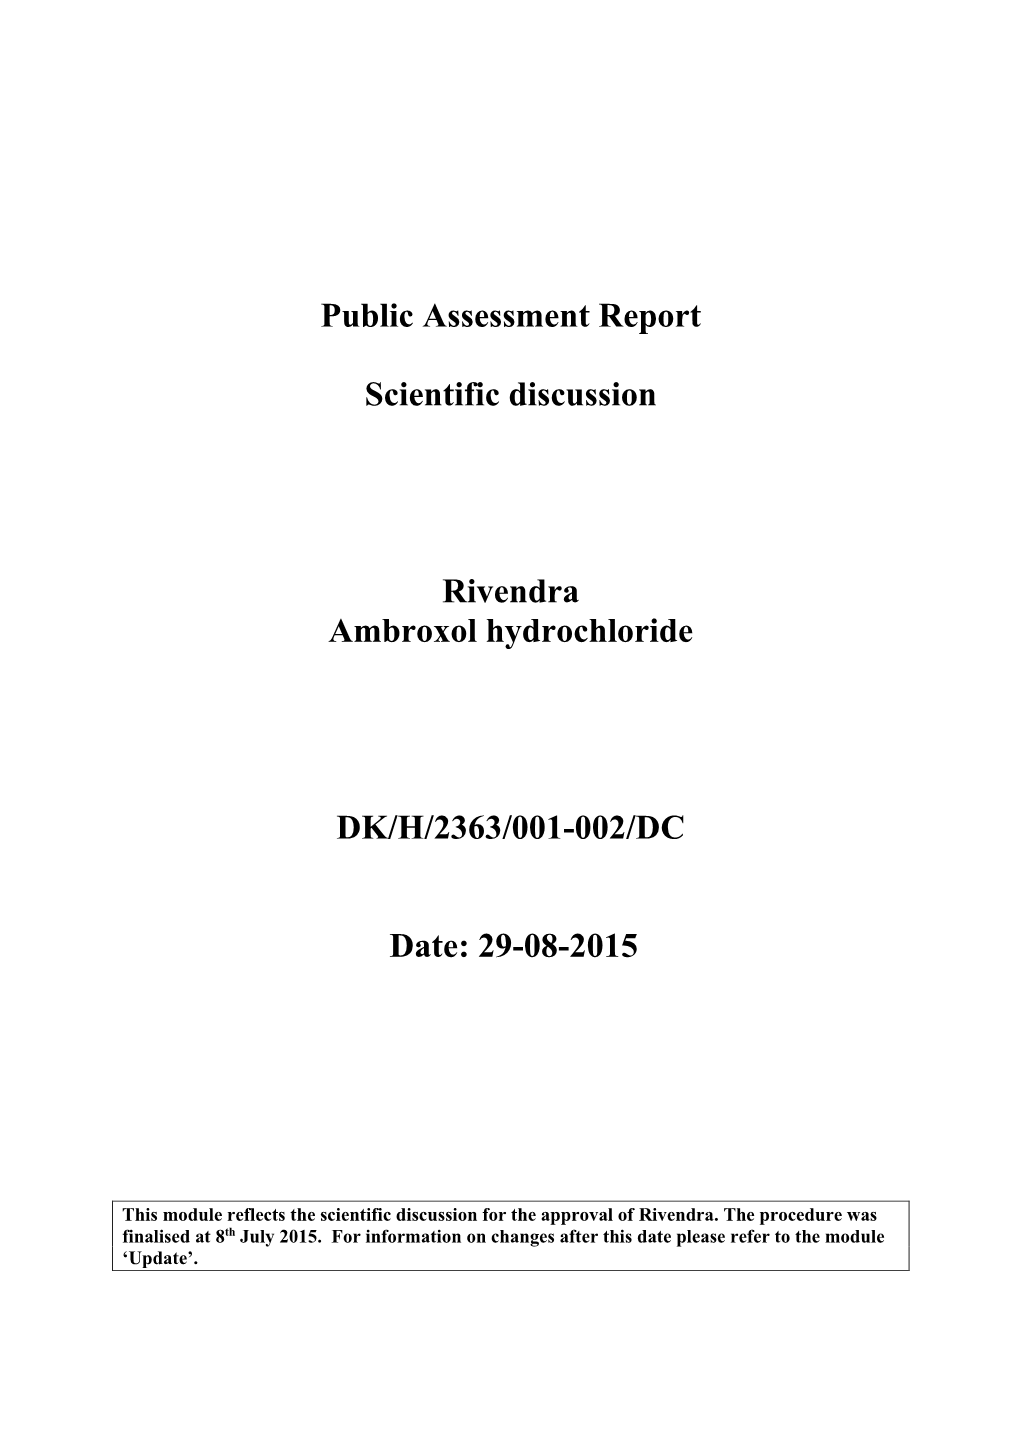 Public Assessment Report Scientific Discussion Rivendra Ambroxol